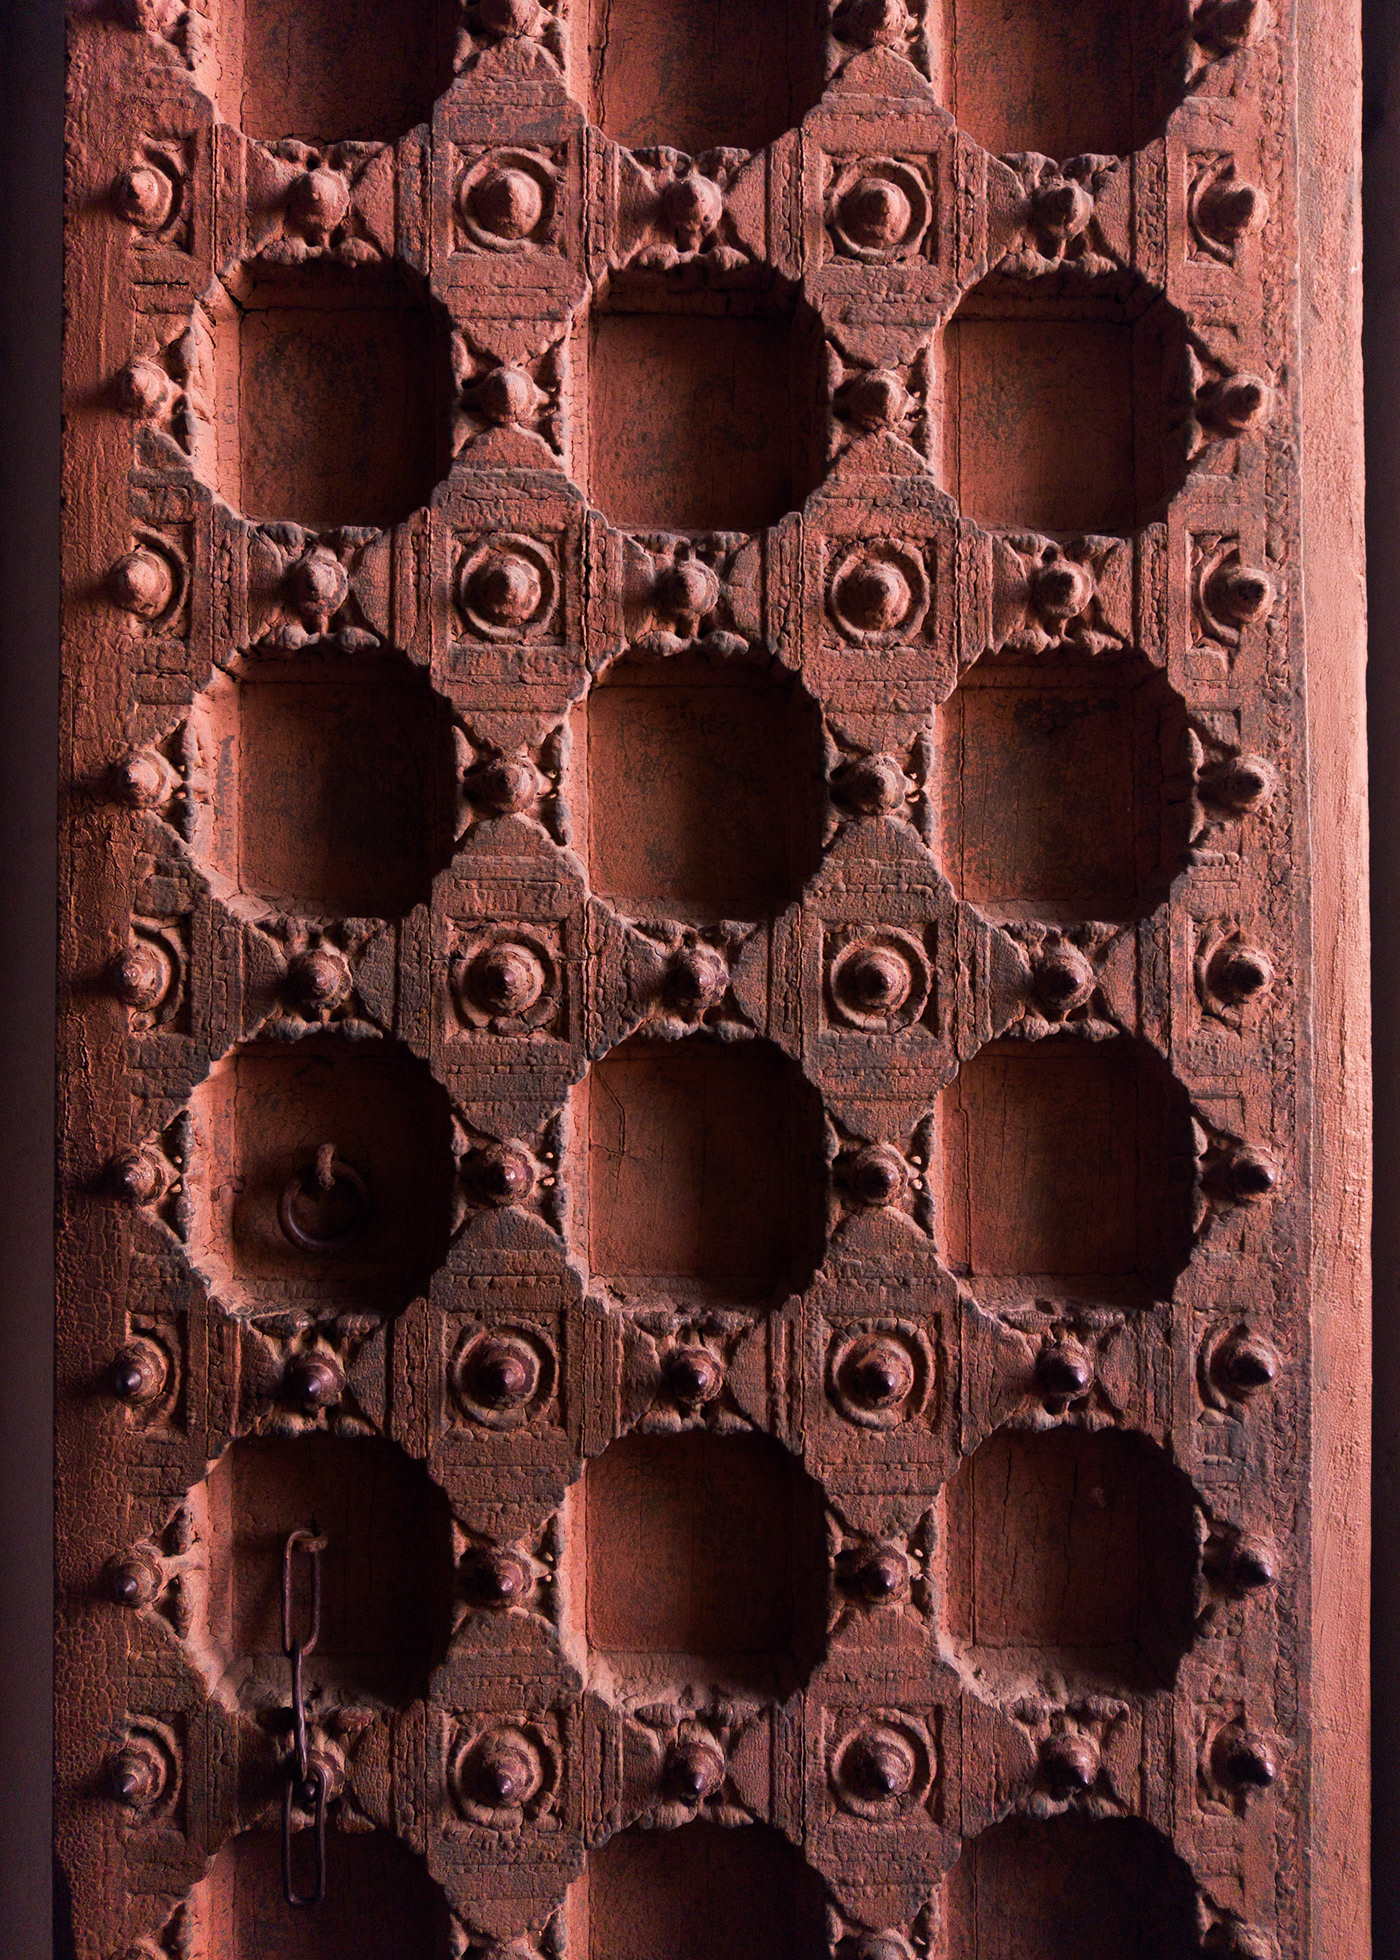 Rajasthan Jaipur jodhpur India door Doors architecture pattern wood brass